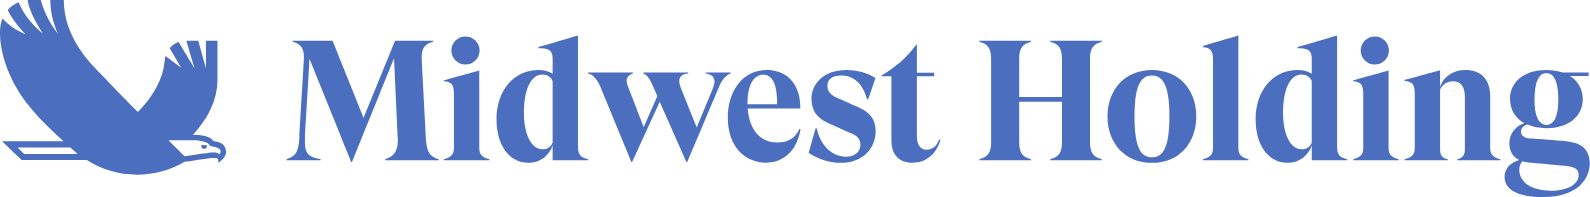 Midwest Holding logo large (transparent PNG)